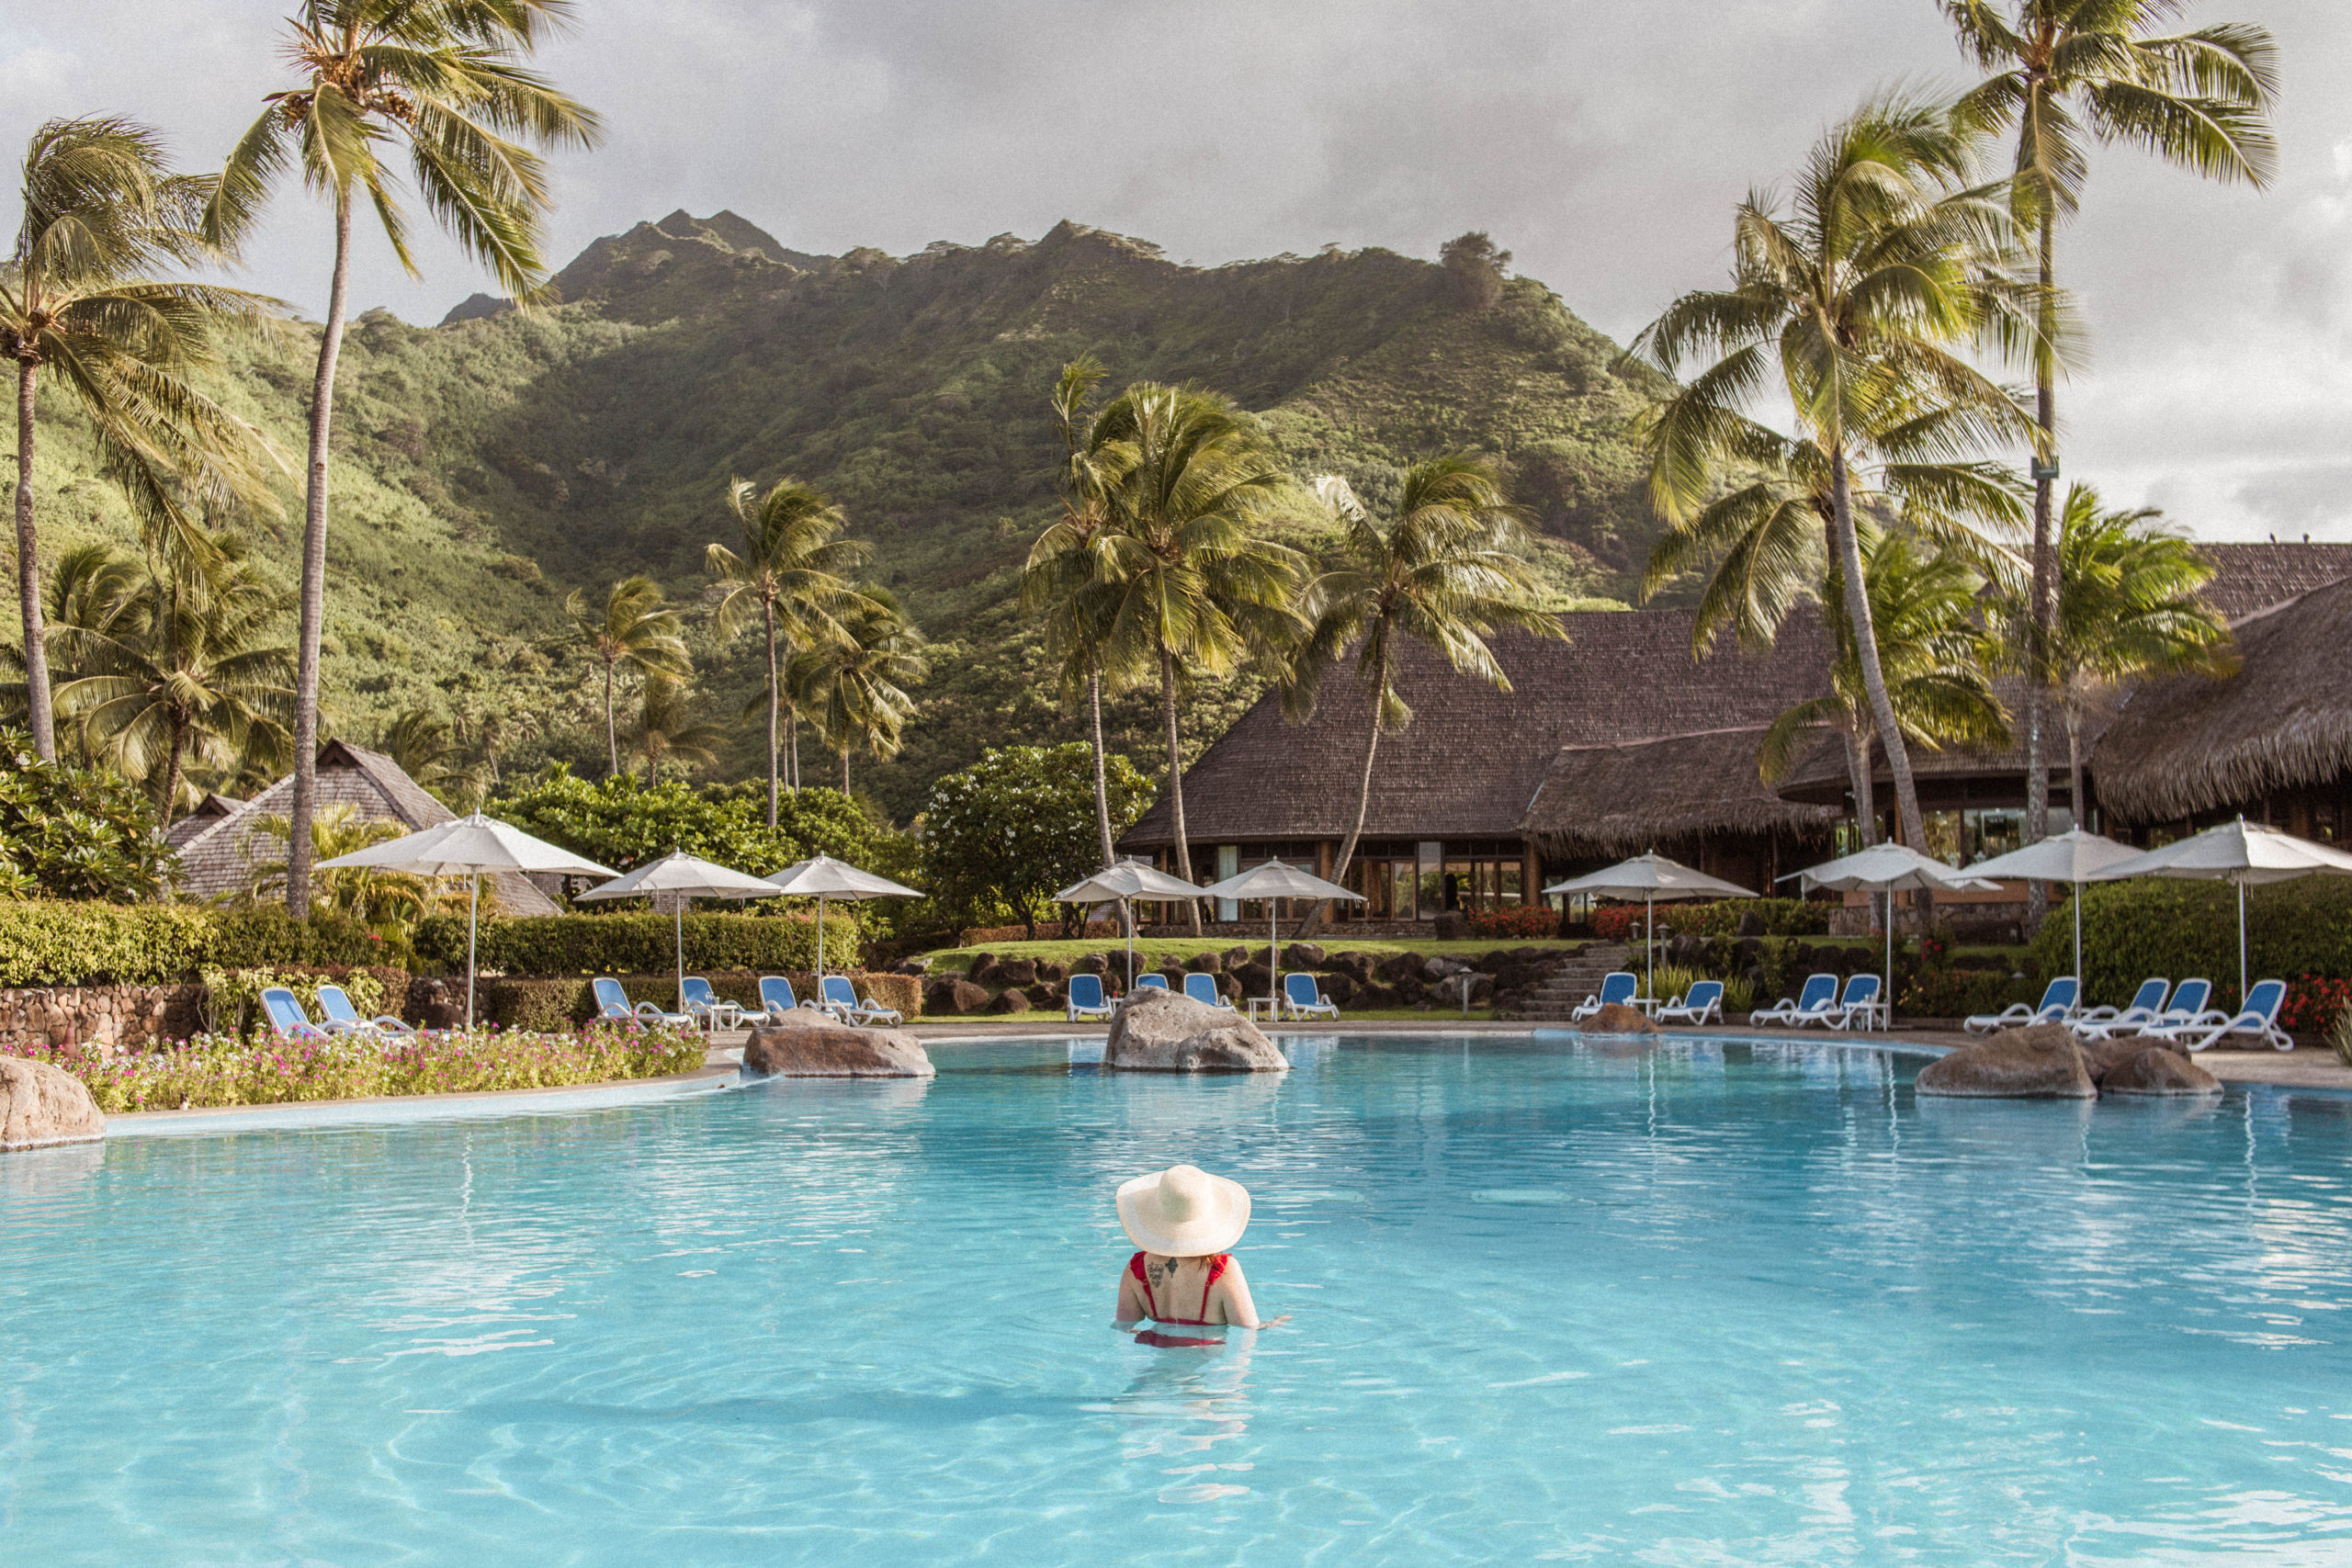 hilton pool, resort pool. tropical vacation